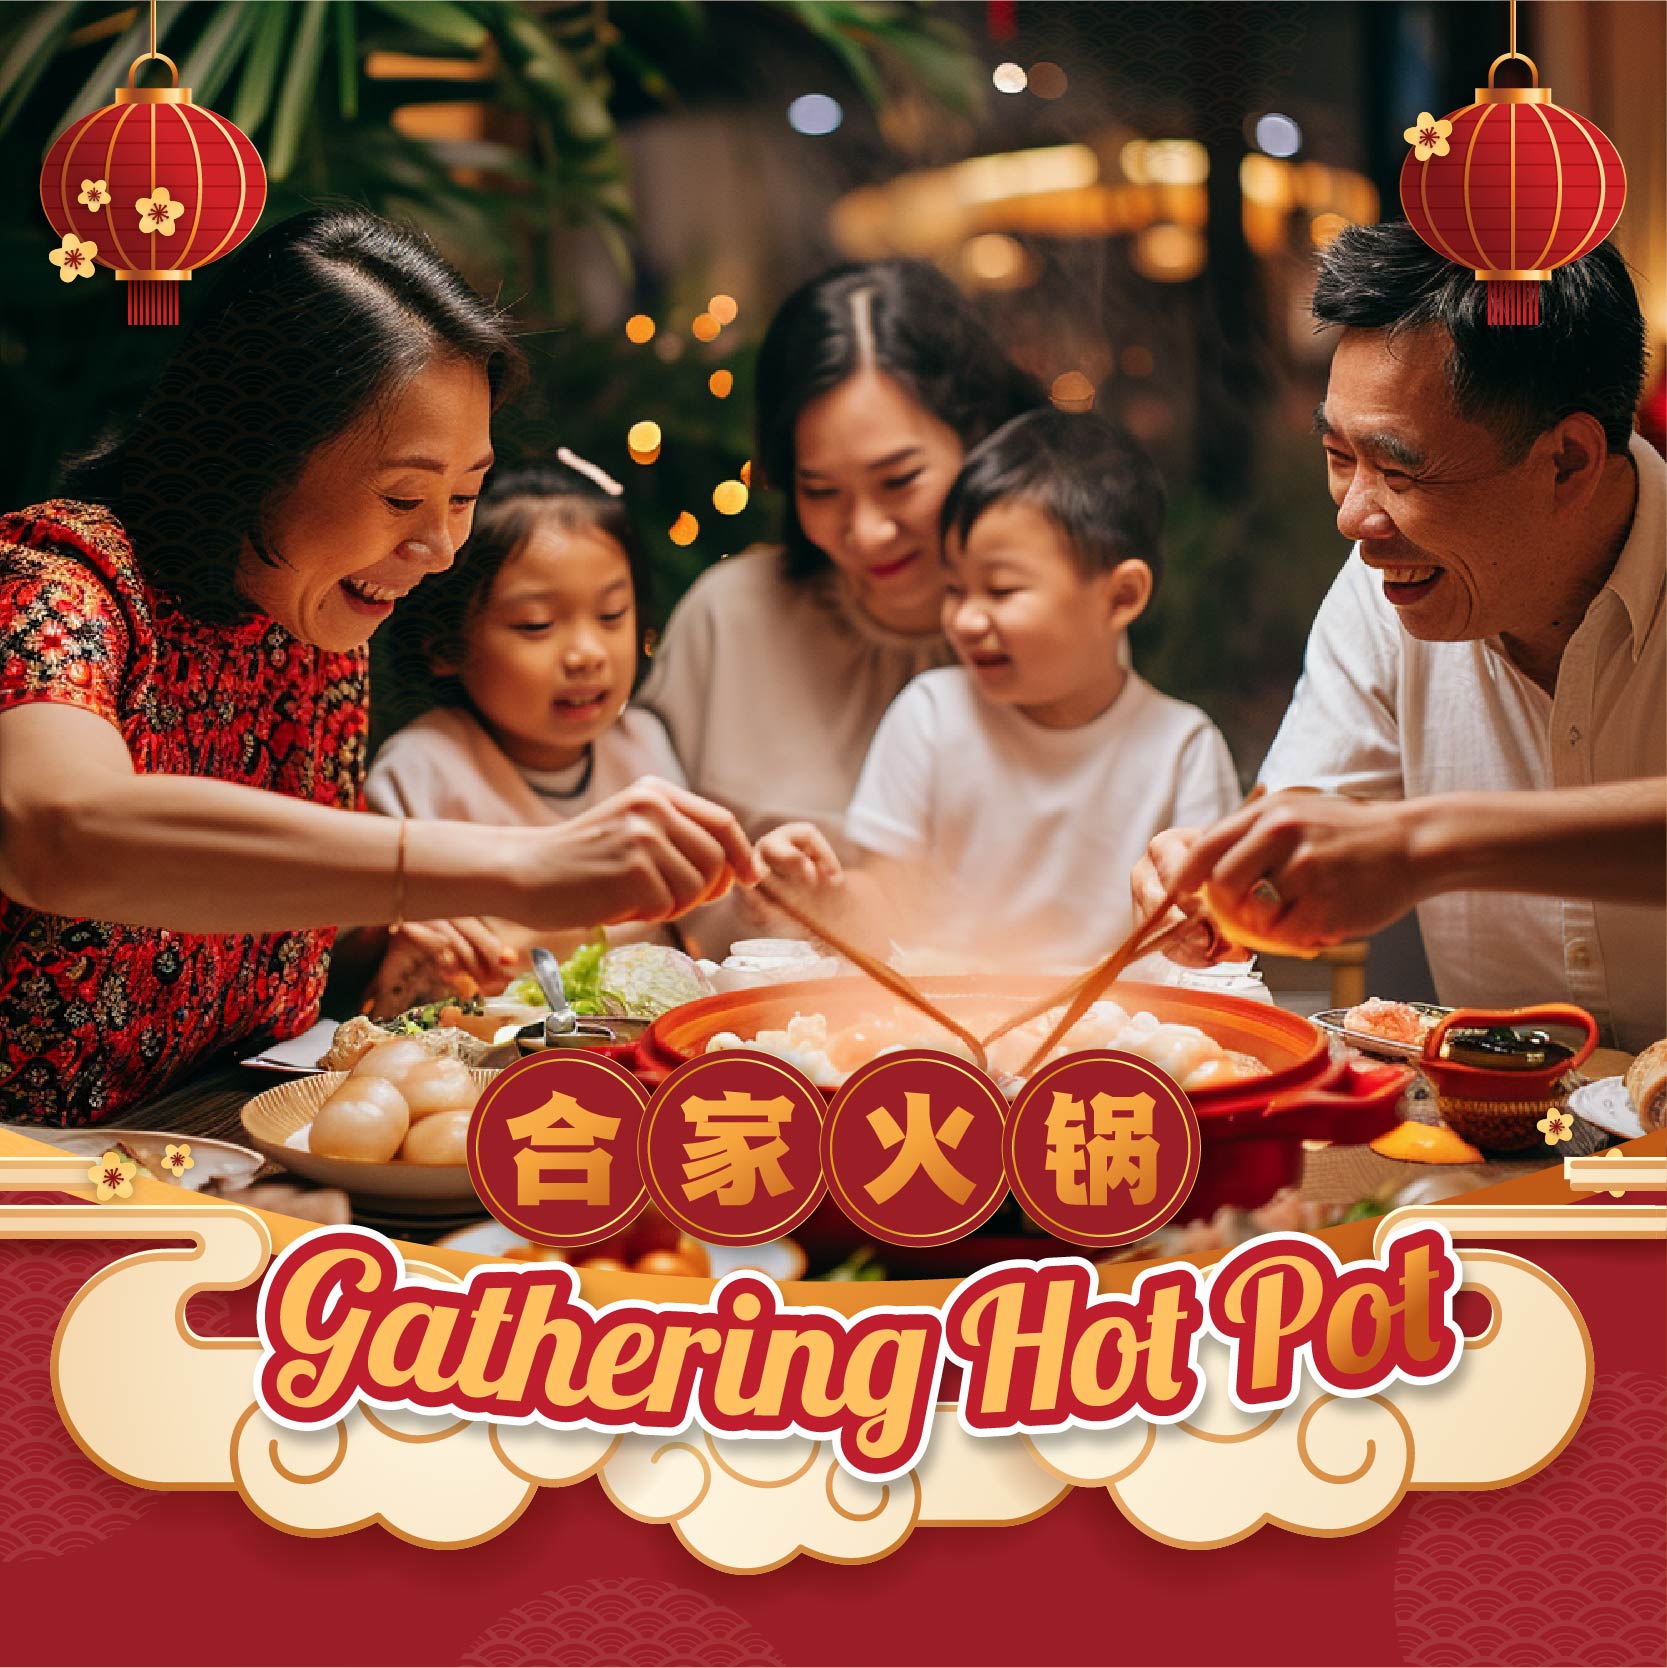 Gathering Hot Pot 火锅(Scallop,Crab,Prawn,Abalone,Lobster Ball,Cheese seafood tofu,Xia hua,Nylon shell,Red grouper sliced)